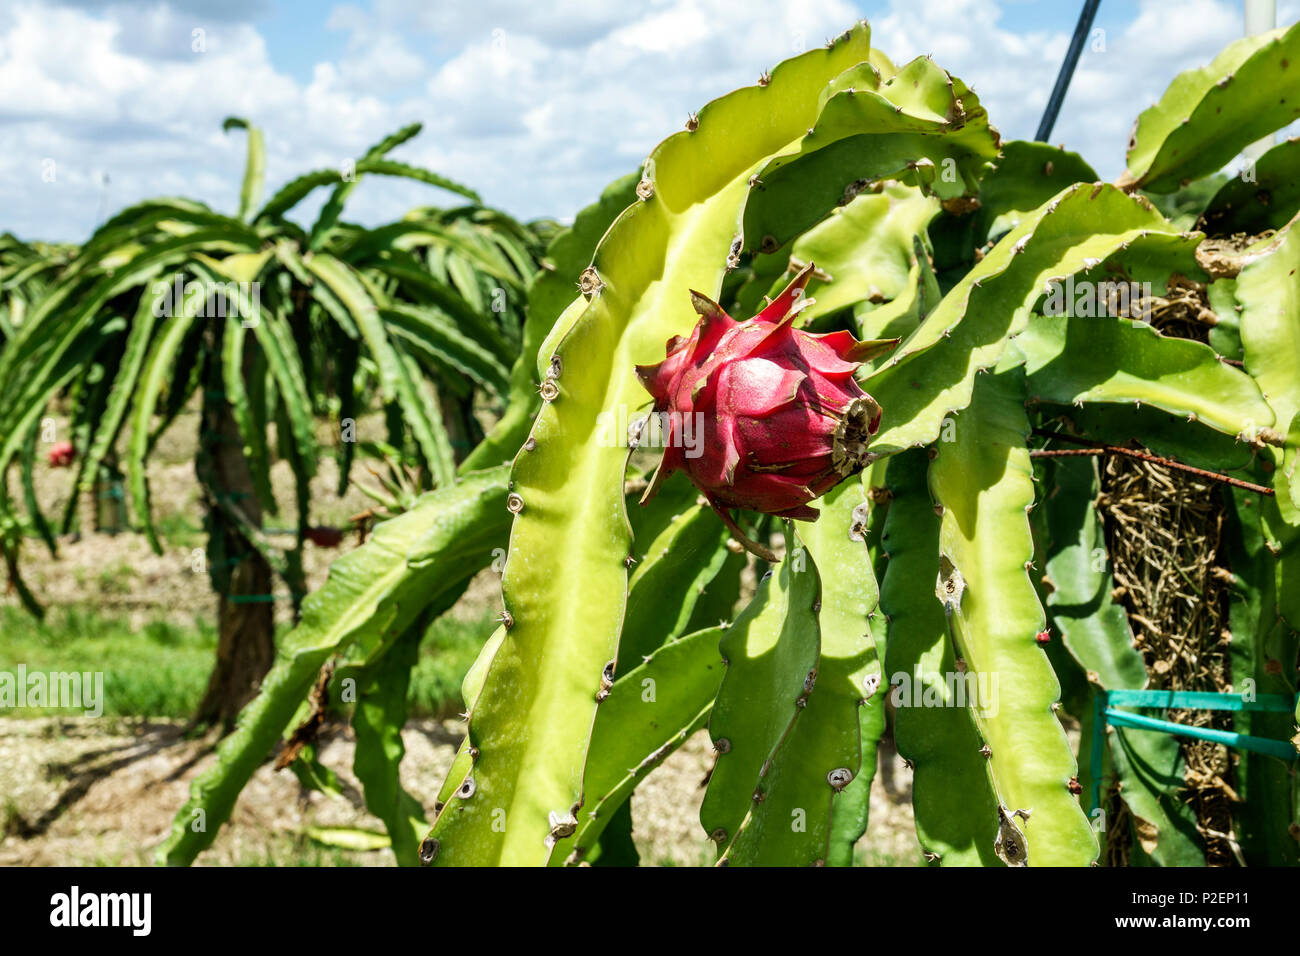 Florida Homestead, Miami, Drachenfruchtkaktus Pitaya Stenocereus pitahaya Hyloce, exotische Früchte, FL170818074 Stockfoto